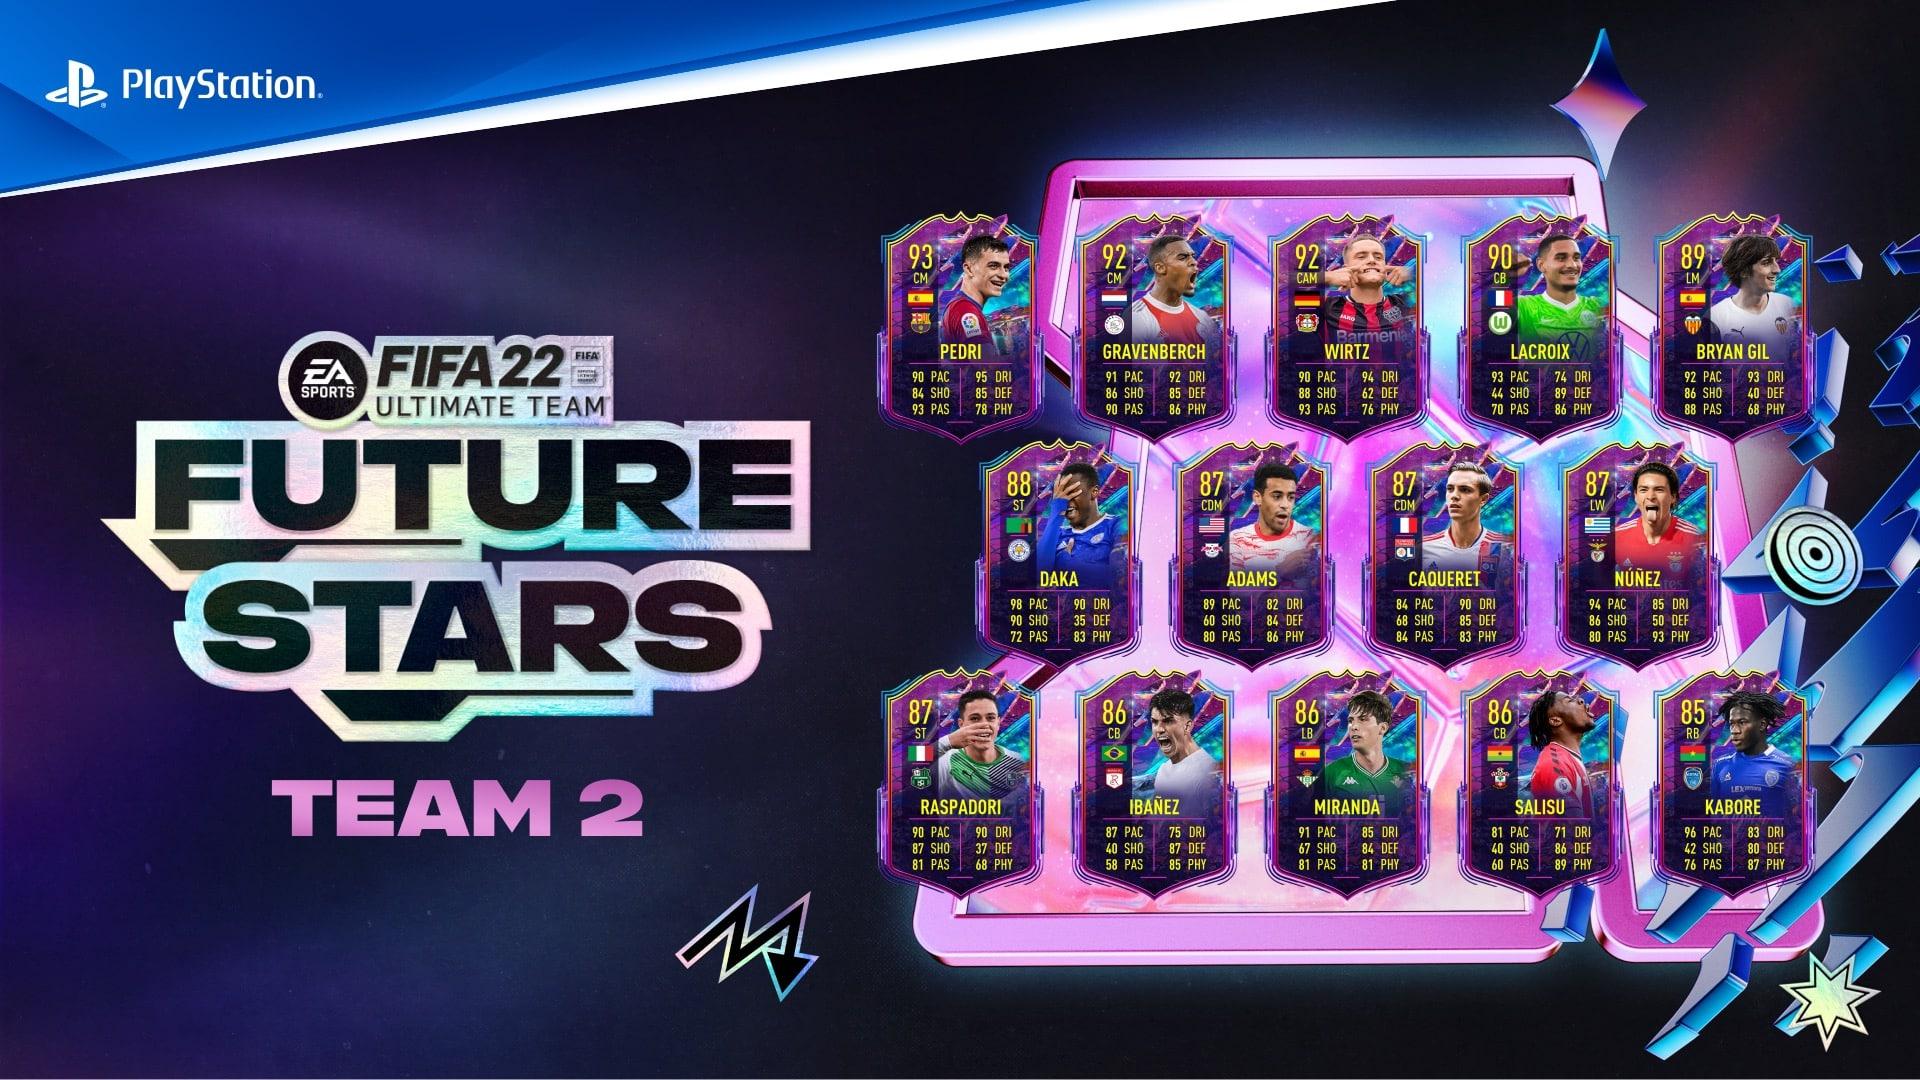 FIFA 22 TEAM 2 FUTURE STARS